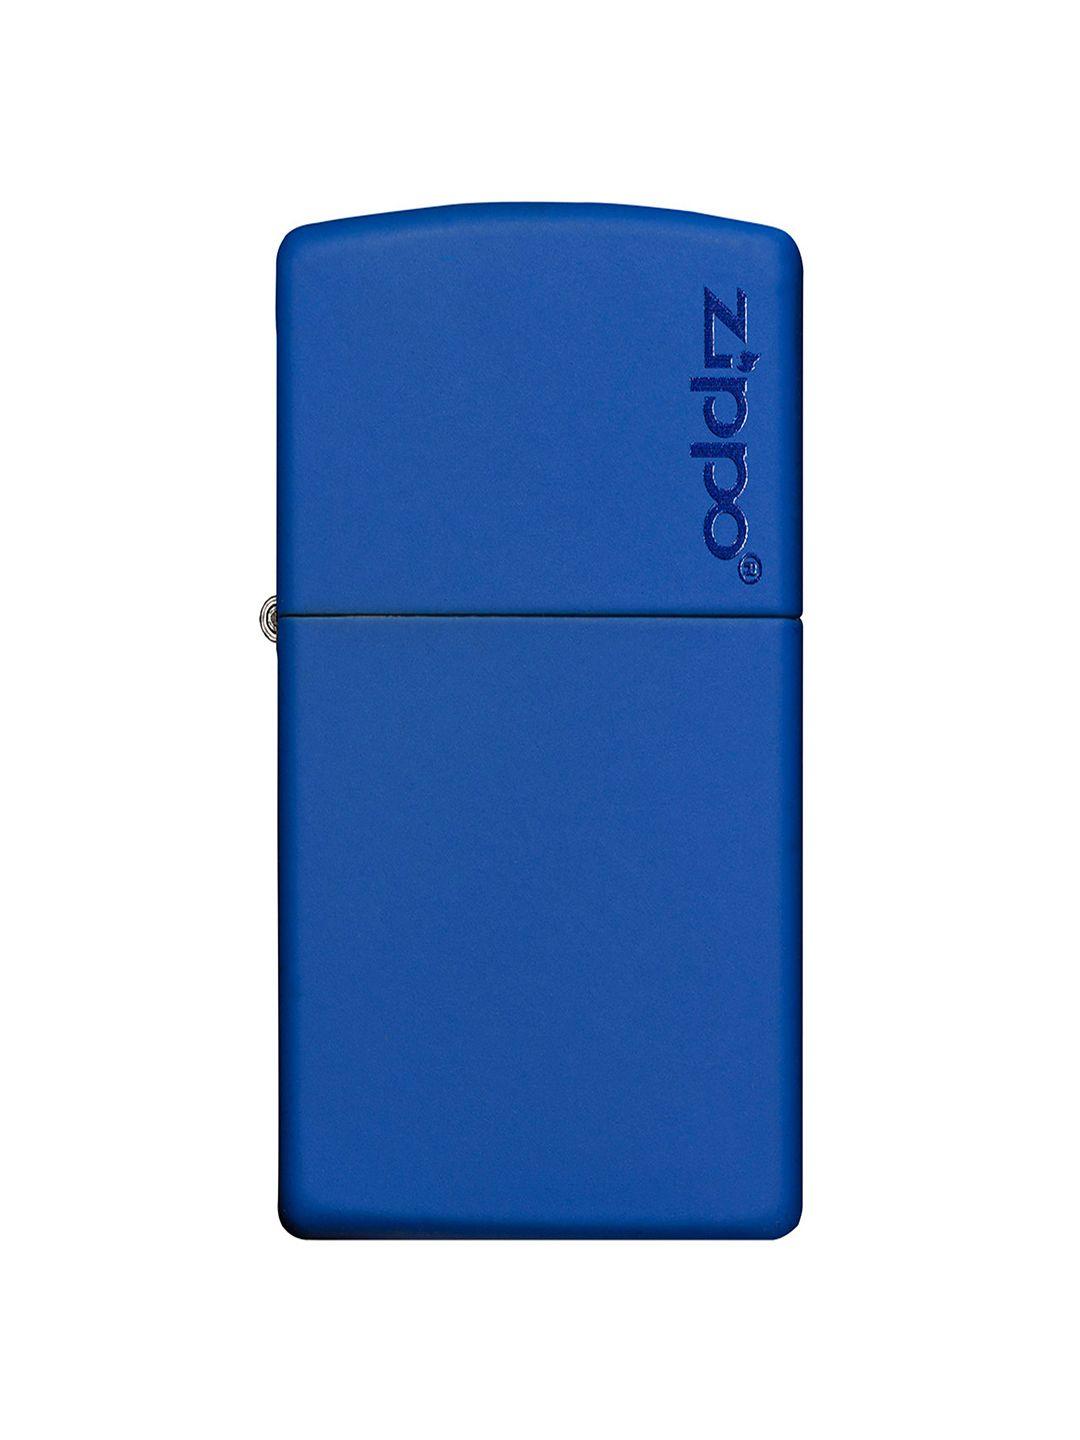 zippo blue matte logo pocket lighter